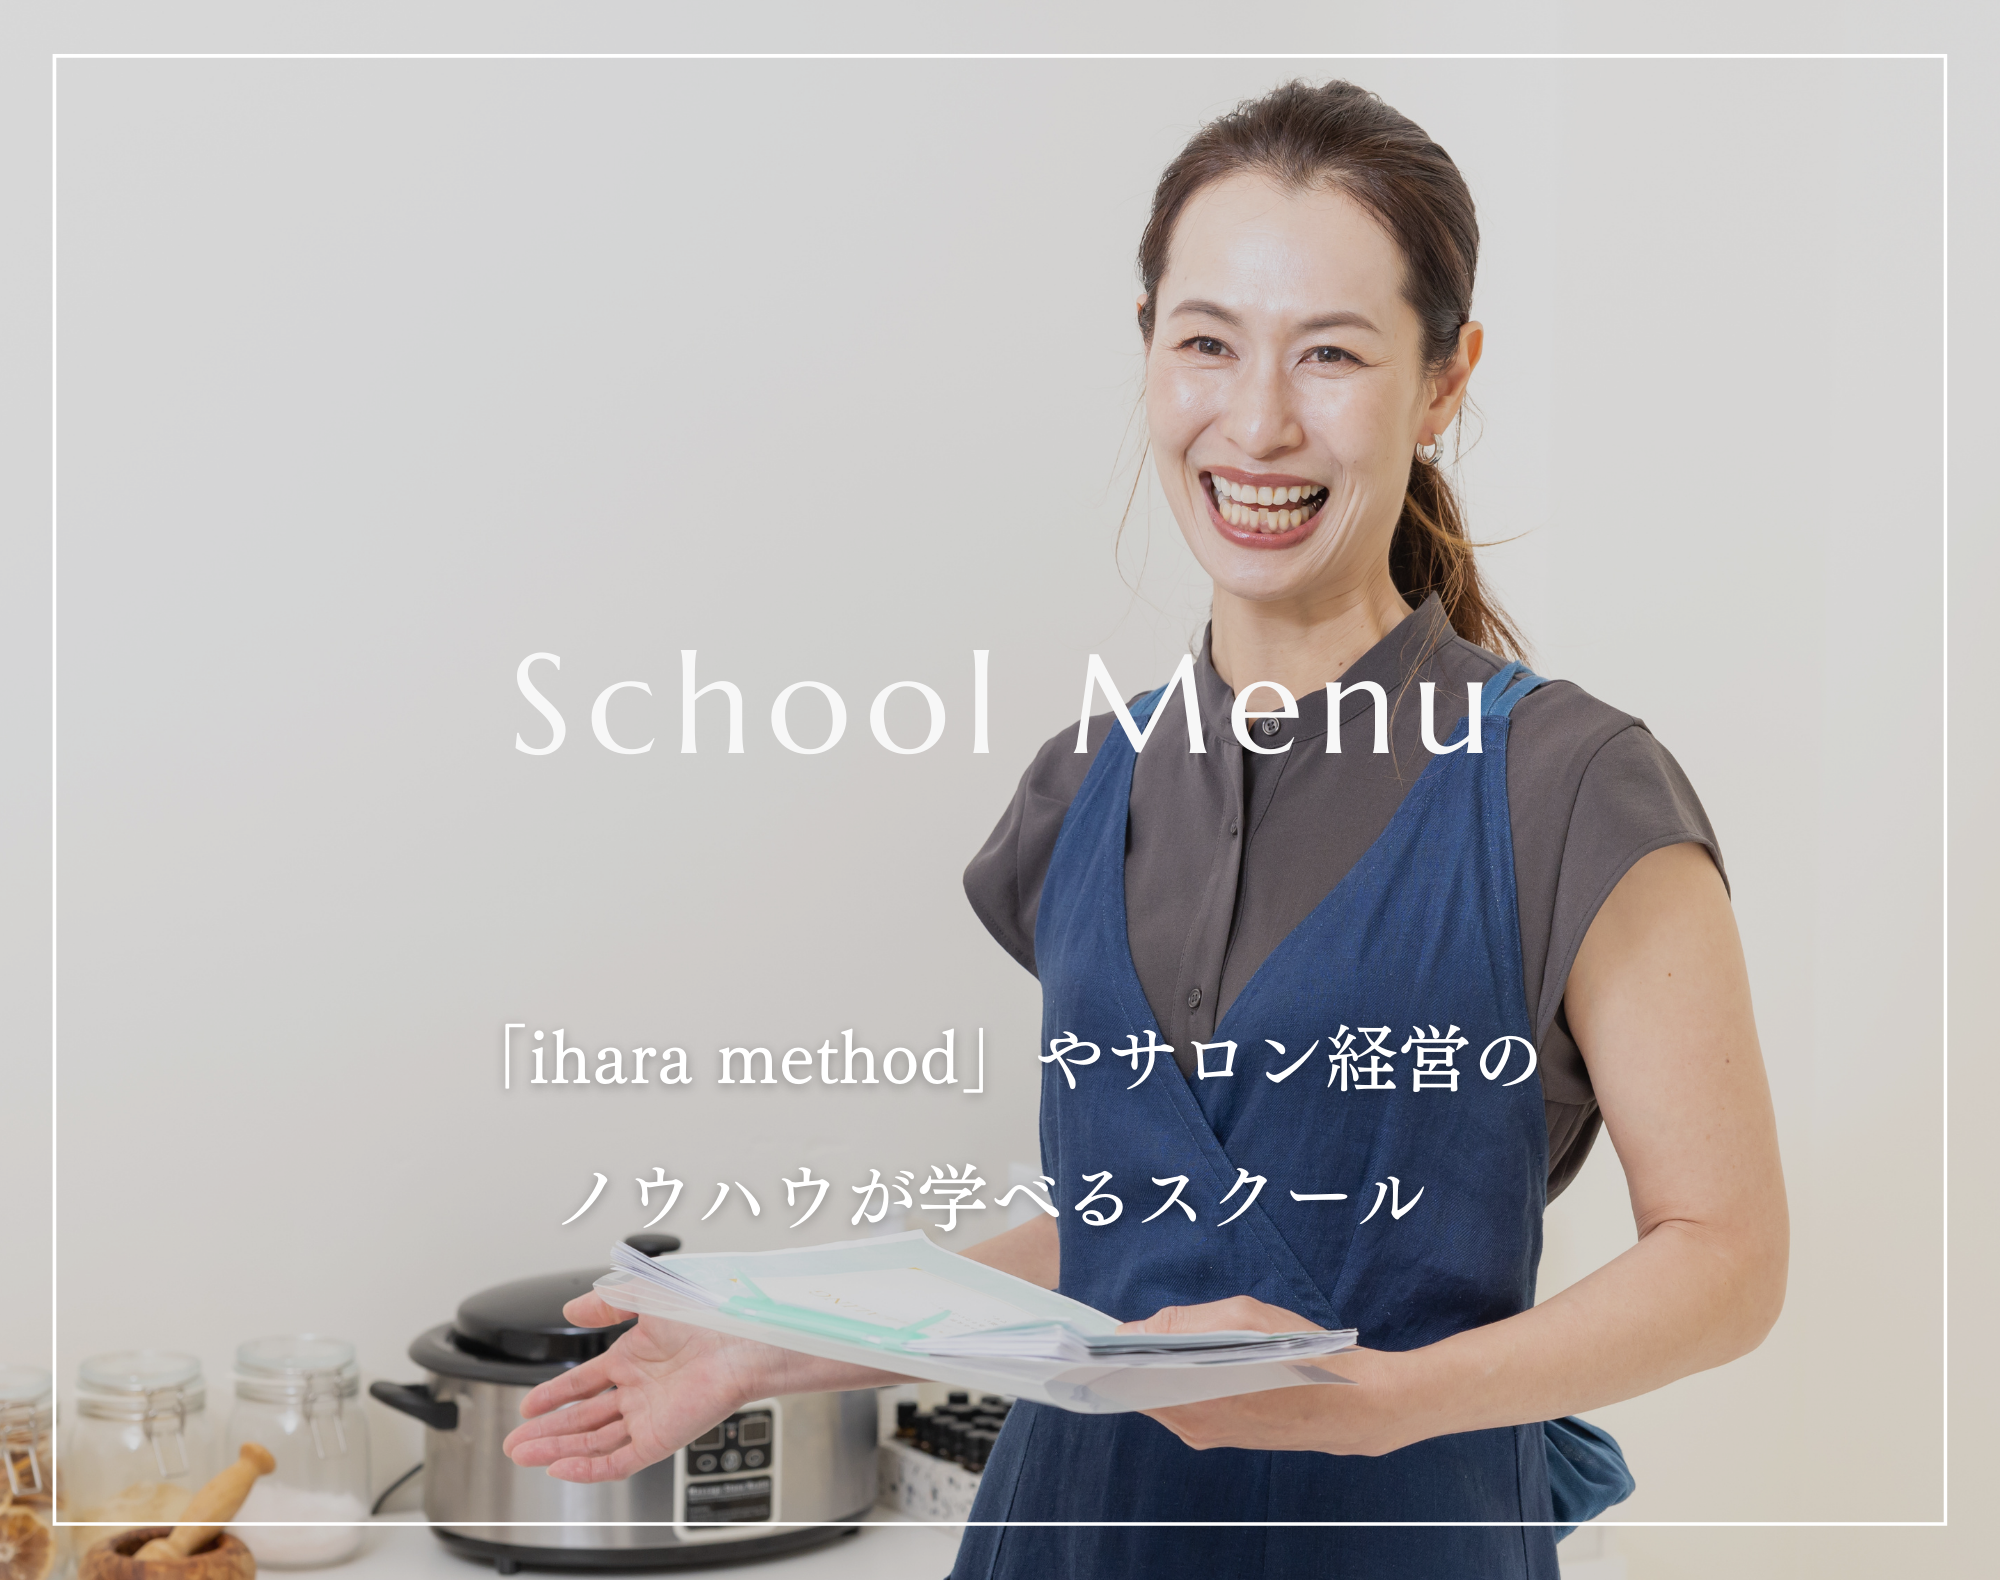 school menu